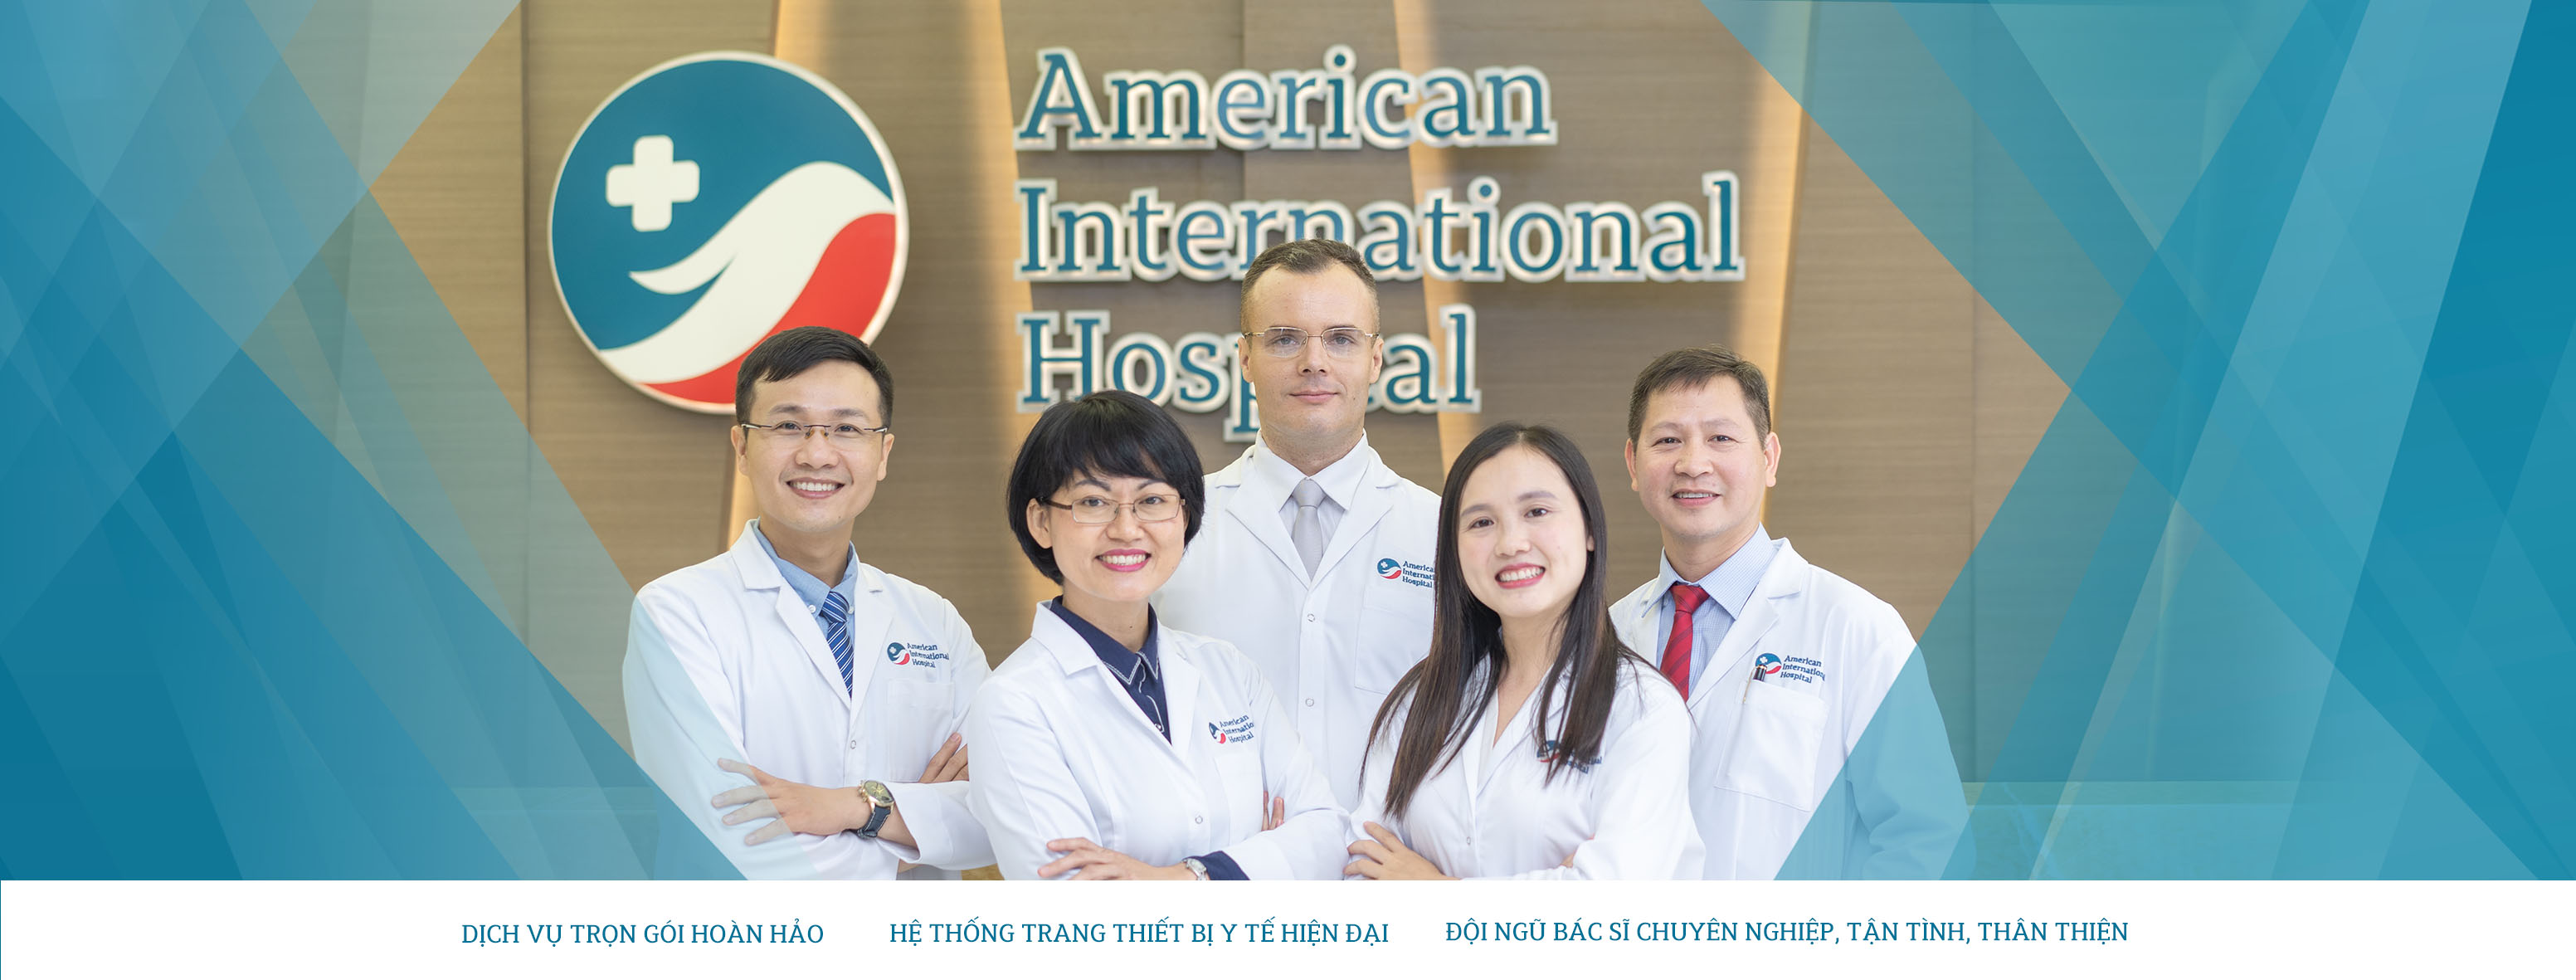 American International Hospital (AIH)